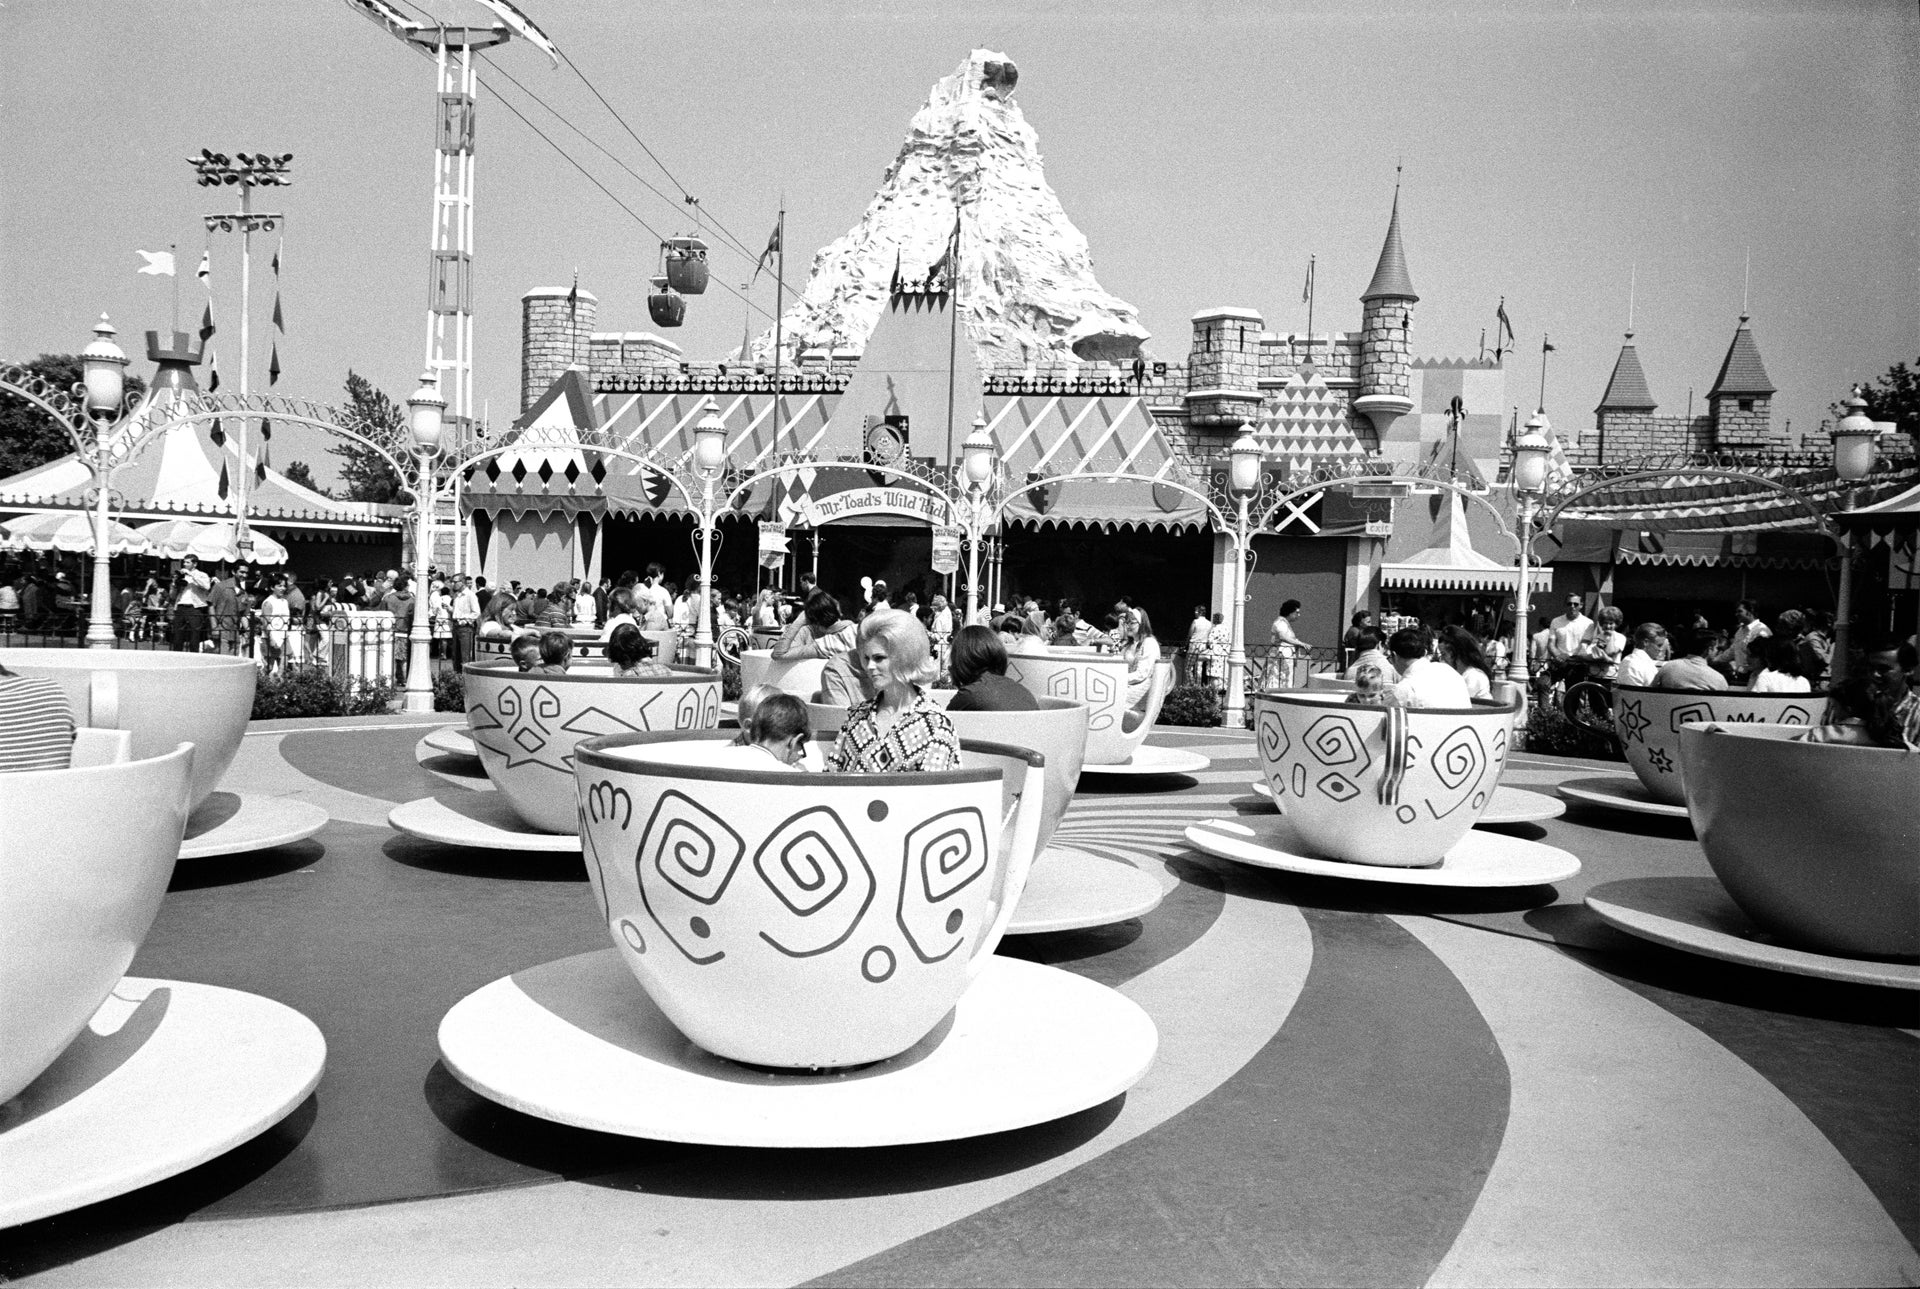 Disney World, Orlando, Florida, 1969